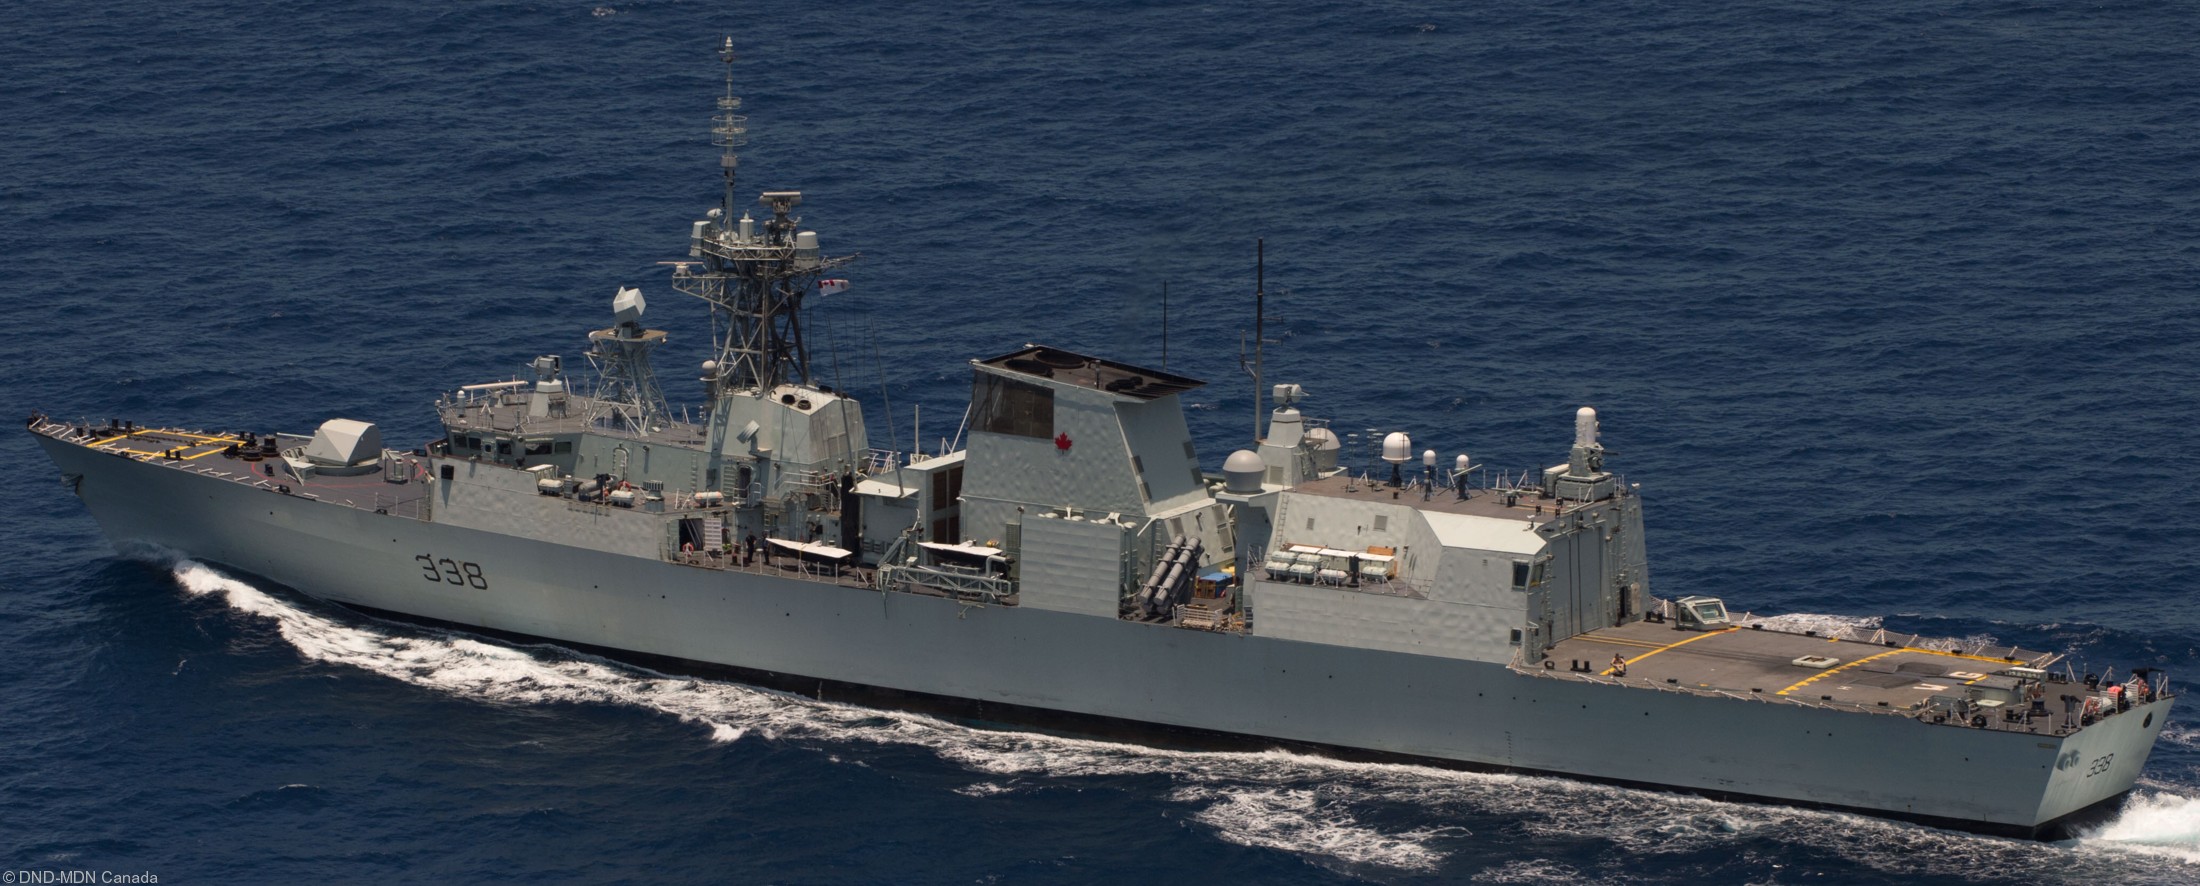 ffh-338 hmcs winnipeg halifax class helicopter patrol frigate ncsm royal canadian navy 58